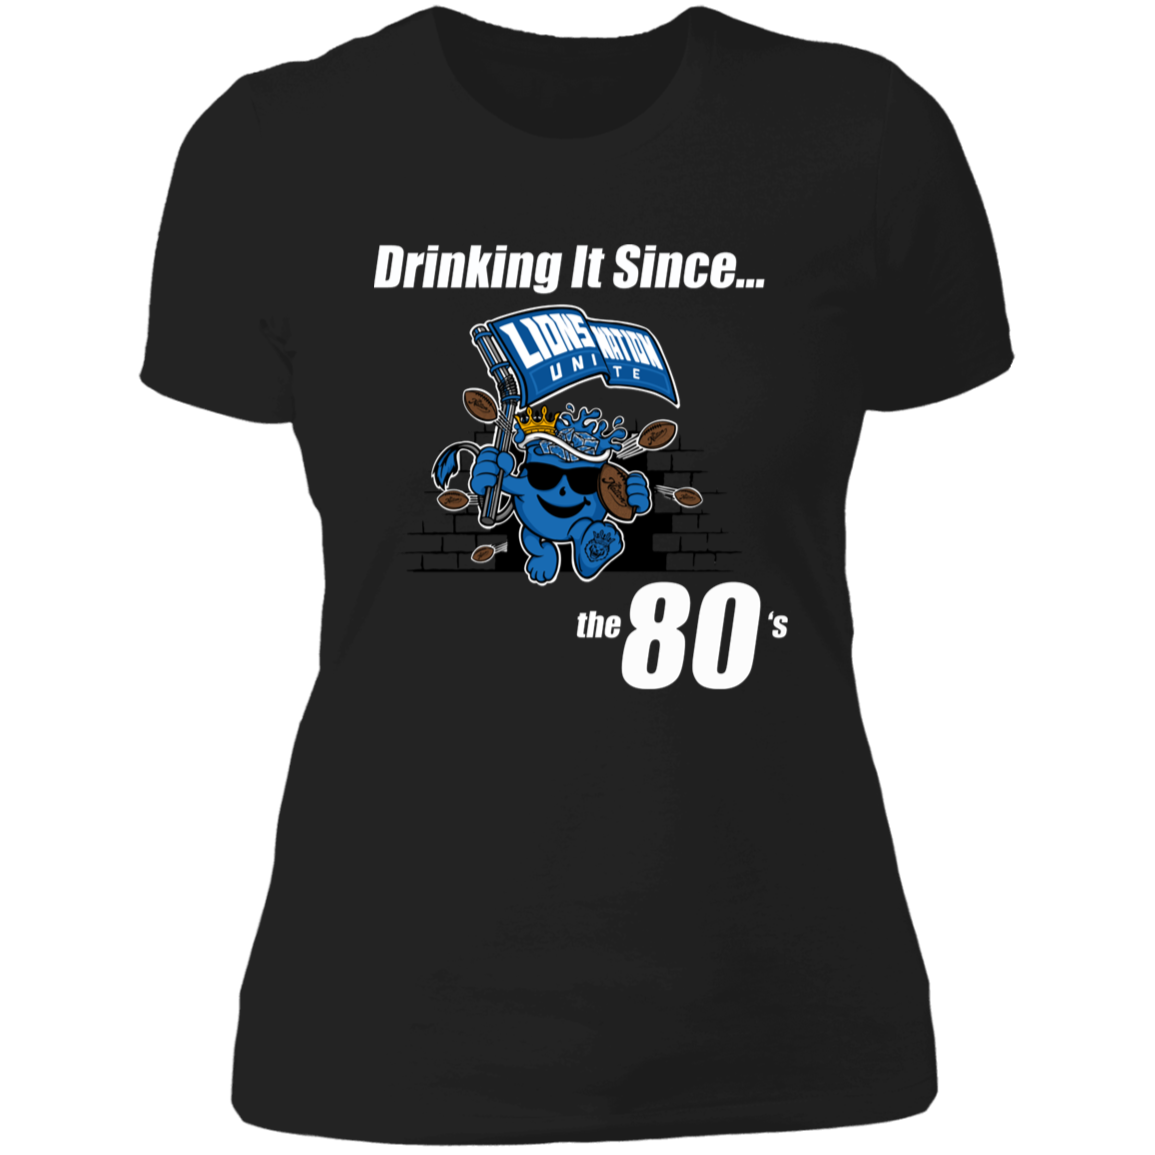 Drinking It Since the 80's Women's T-Shirt